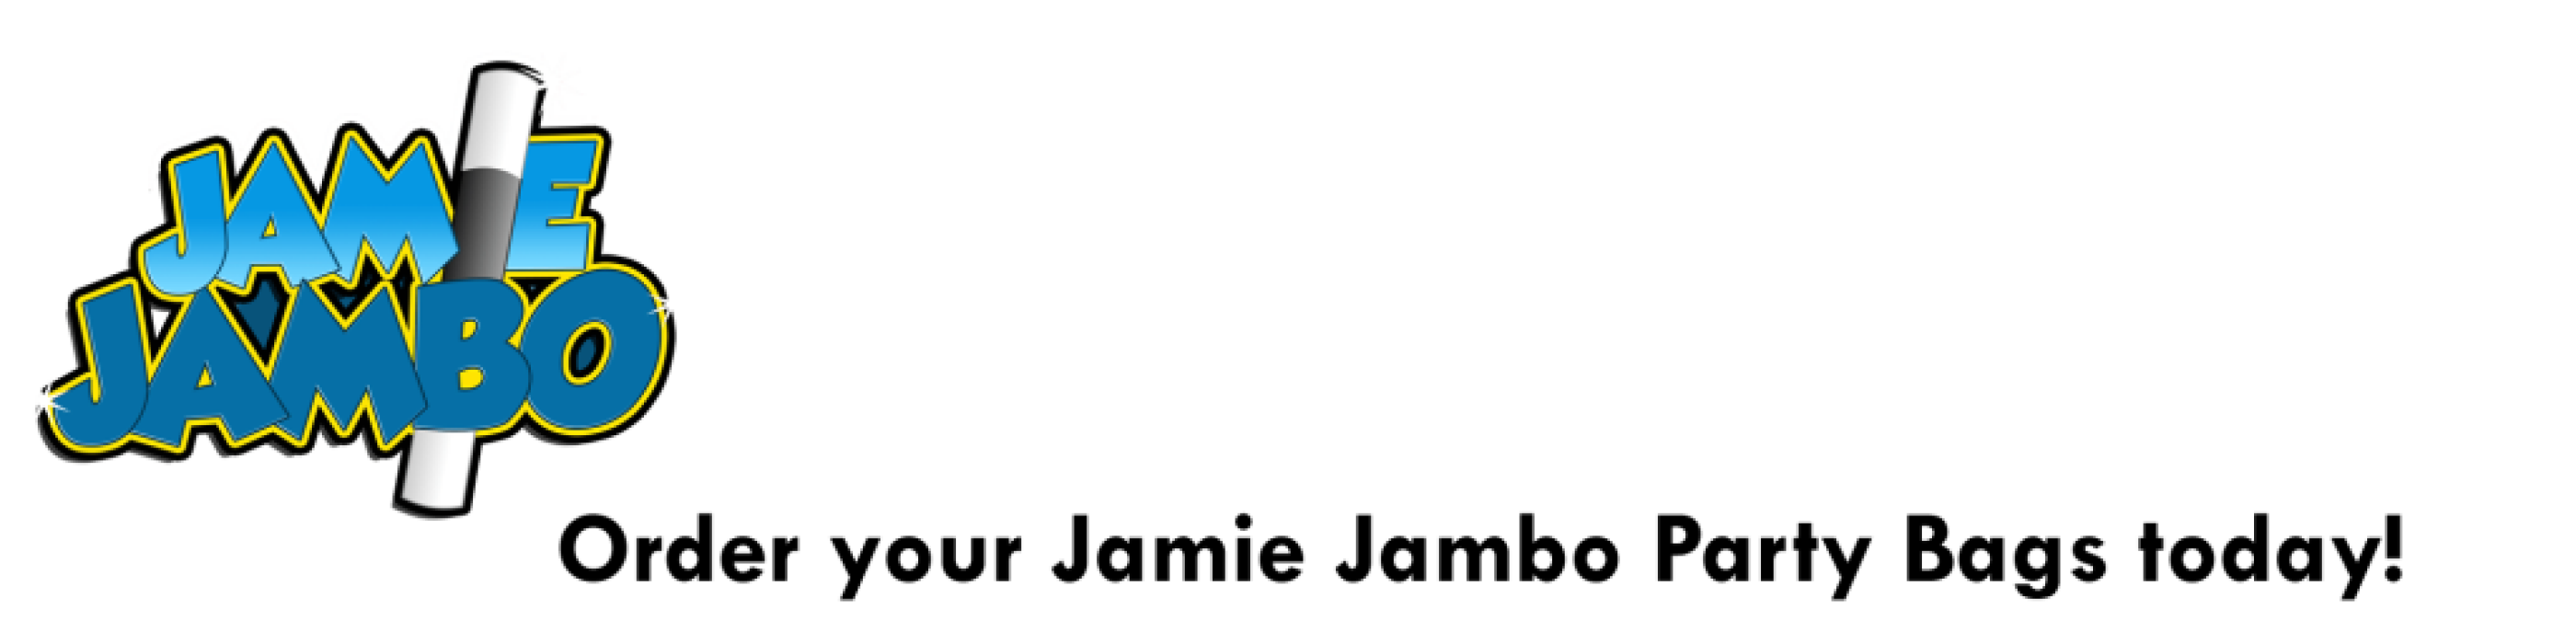 Jamie Jambo Party Bags